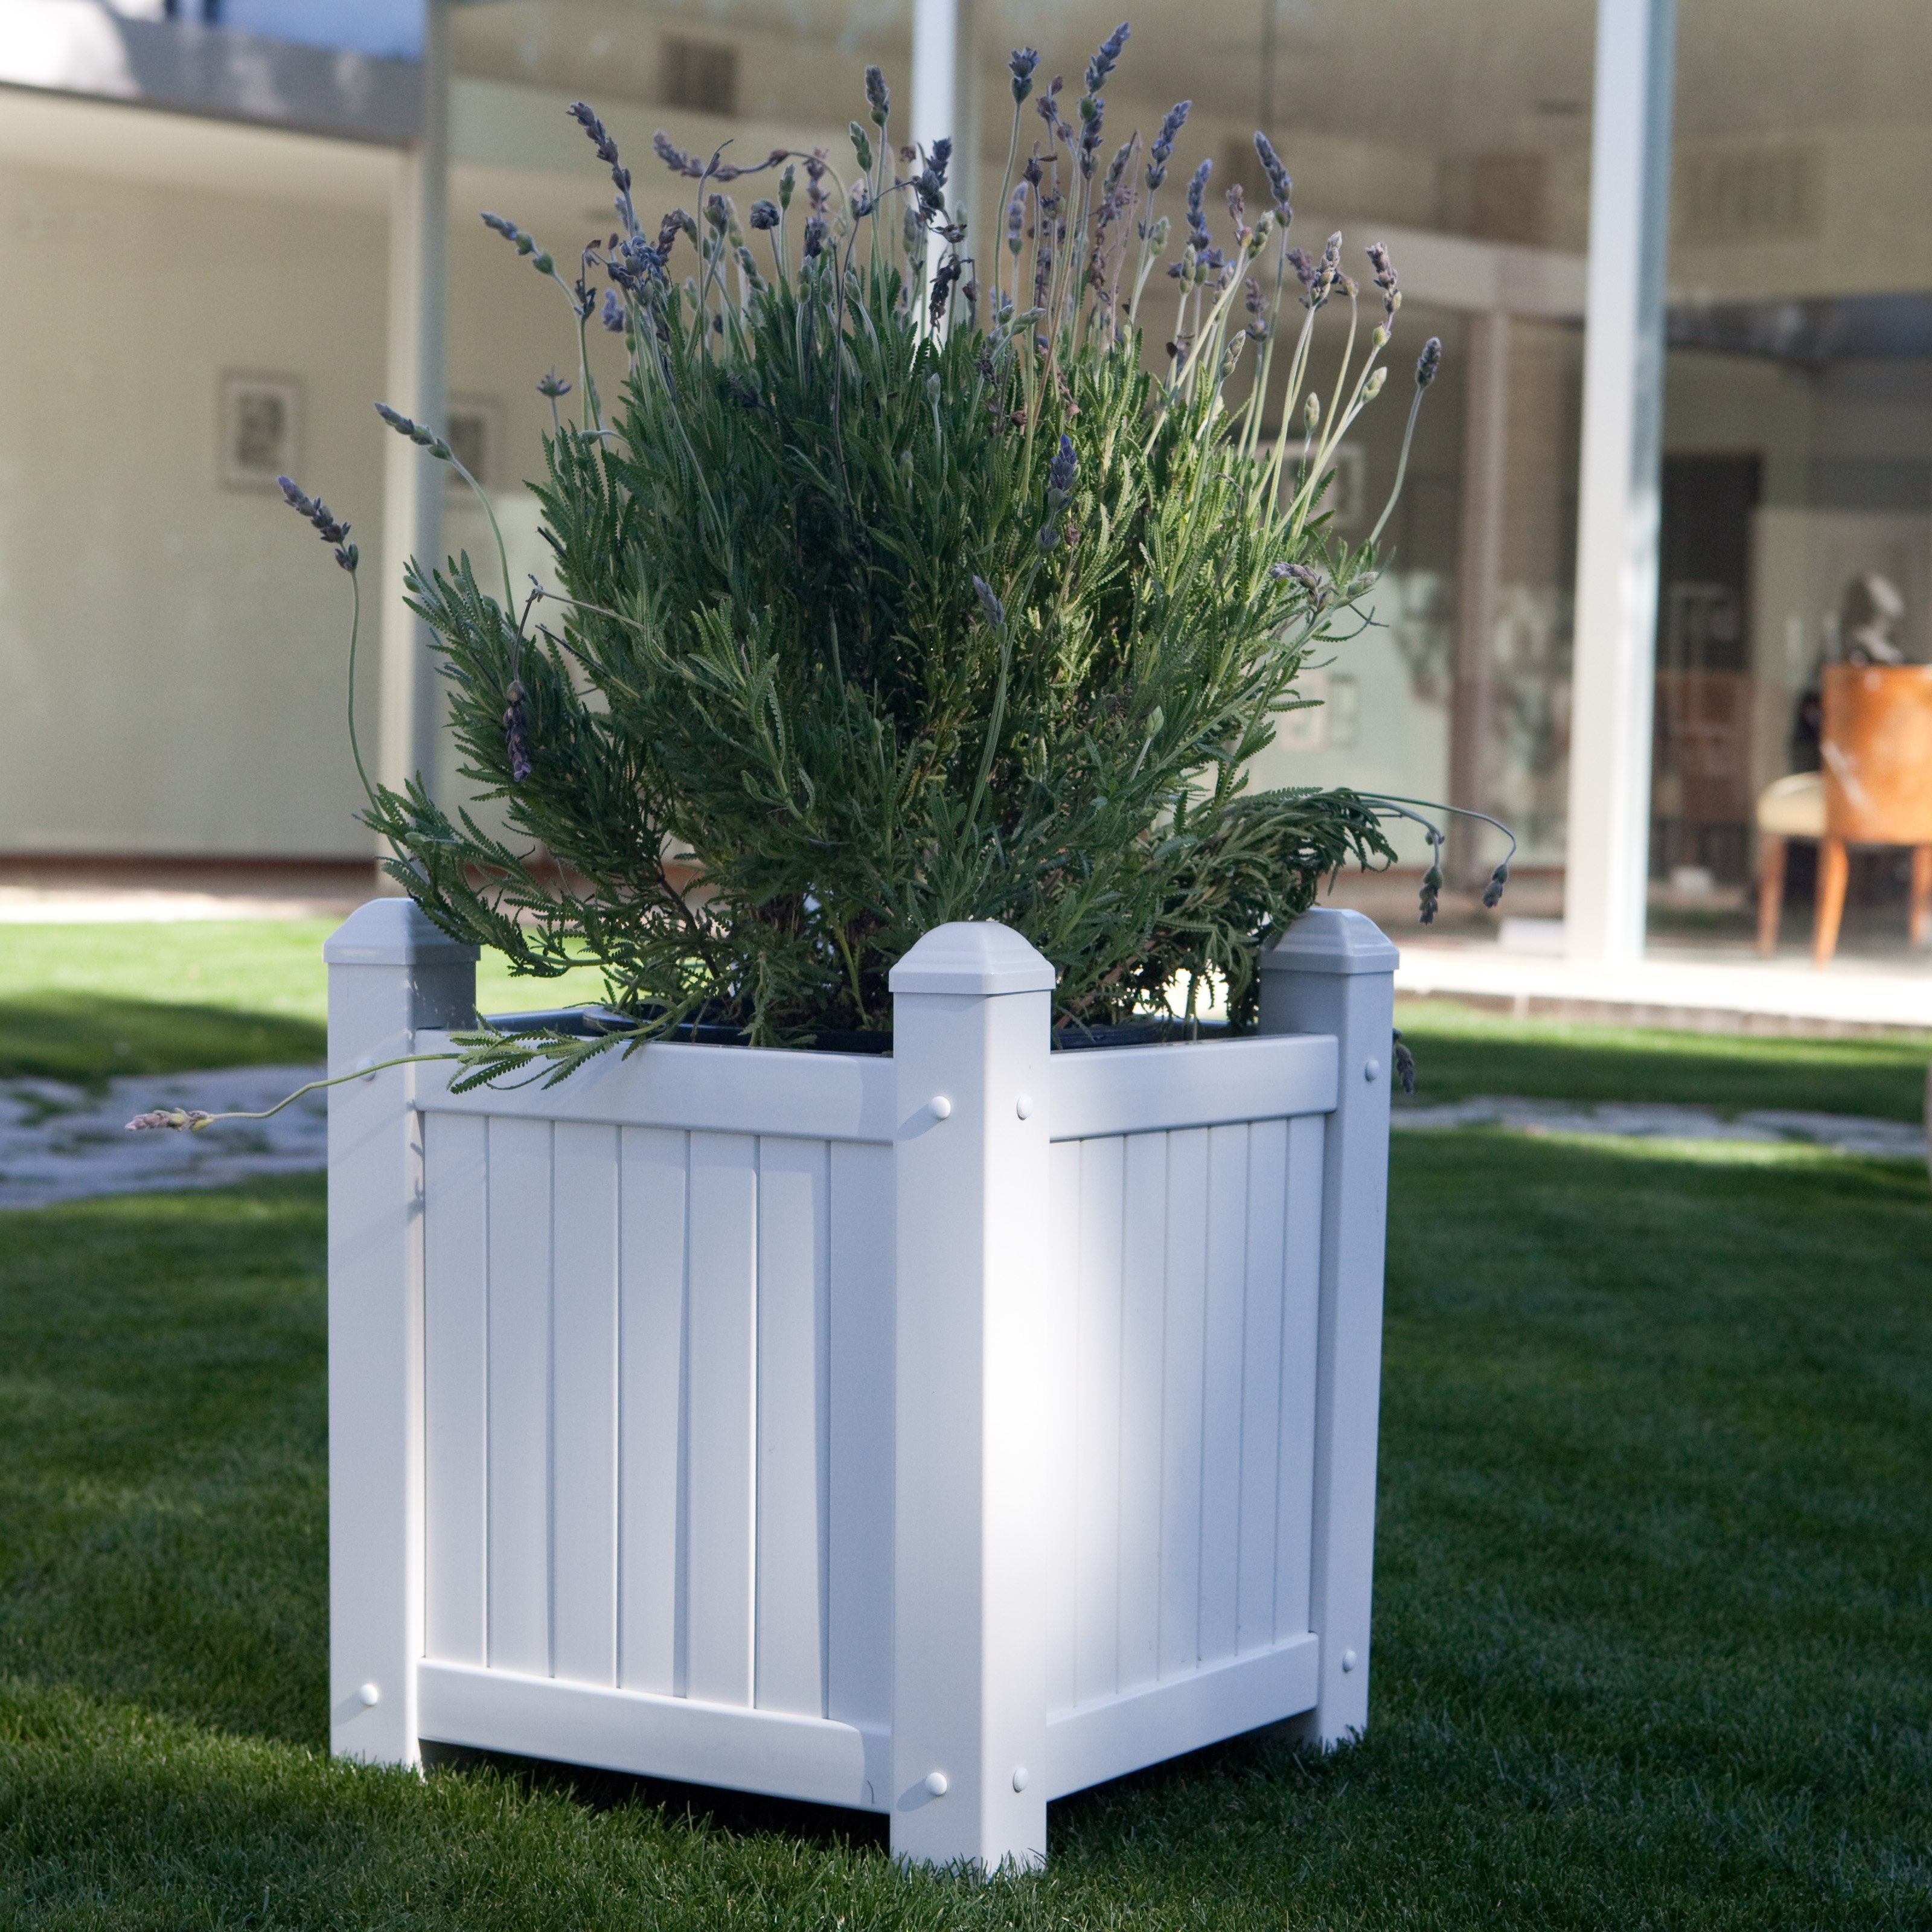 Wooden Square Planter Box Garden Design Ideas